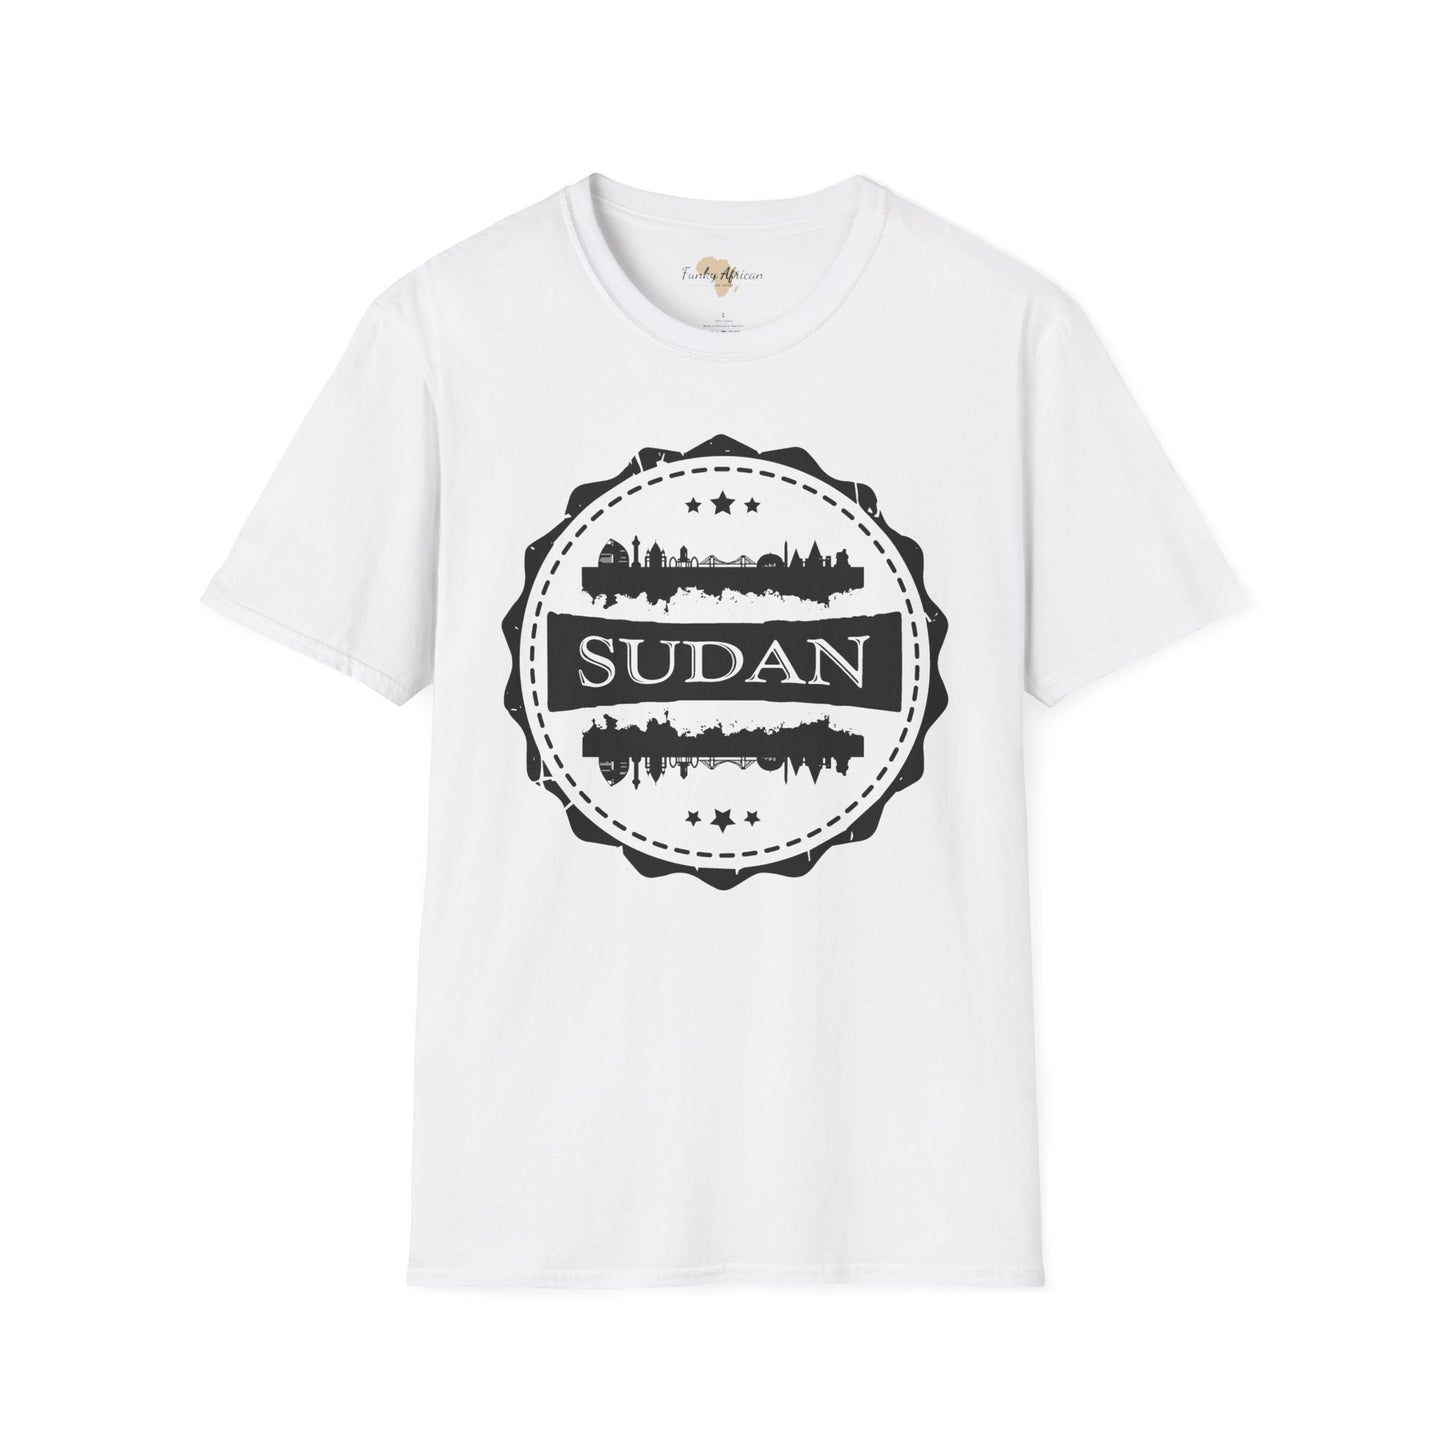 Sudan Stamp unisex tee